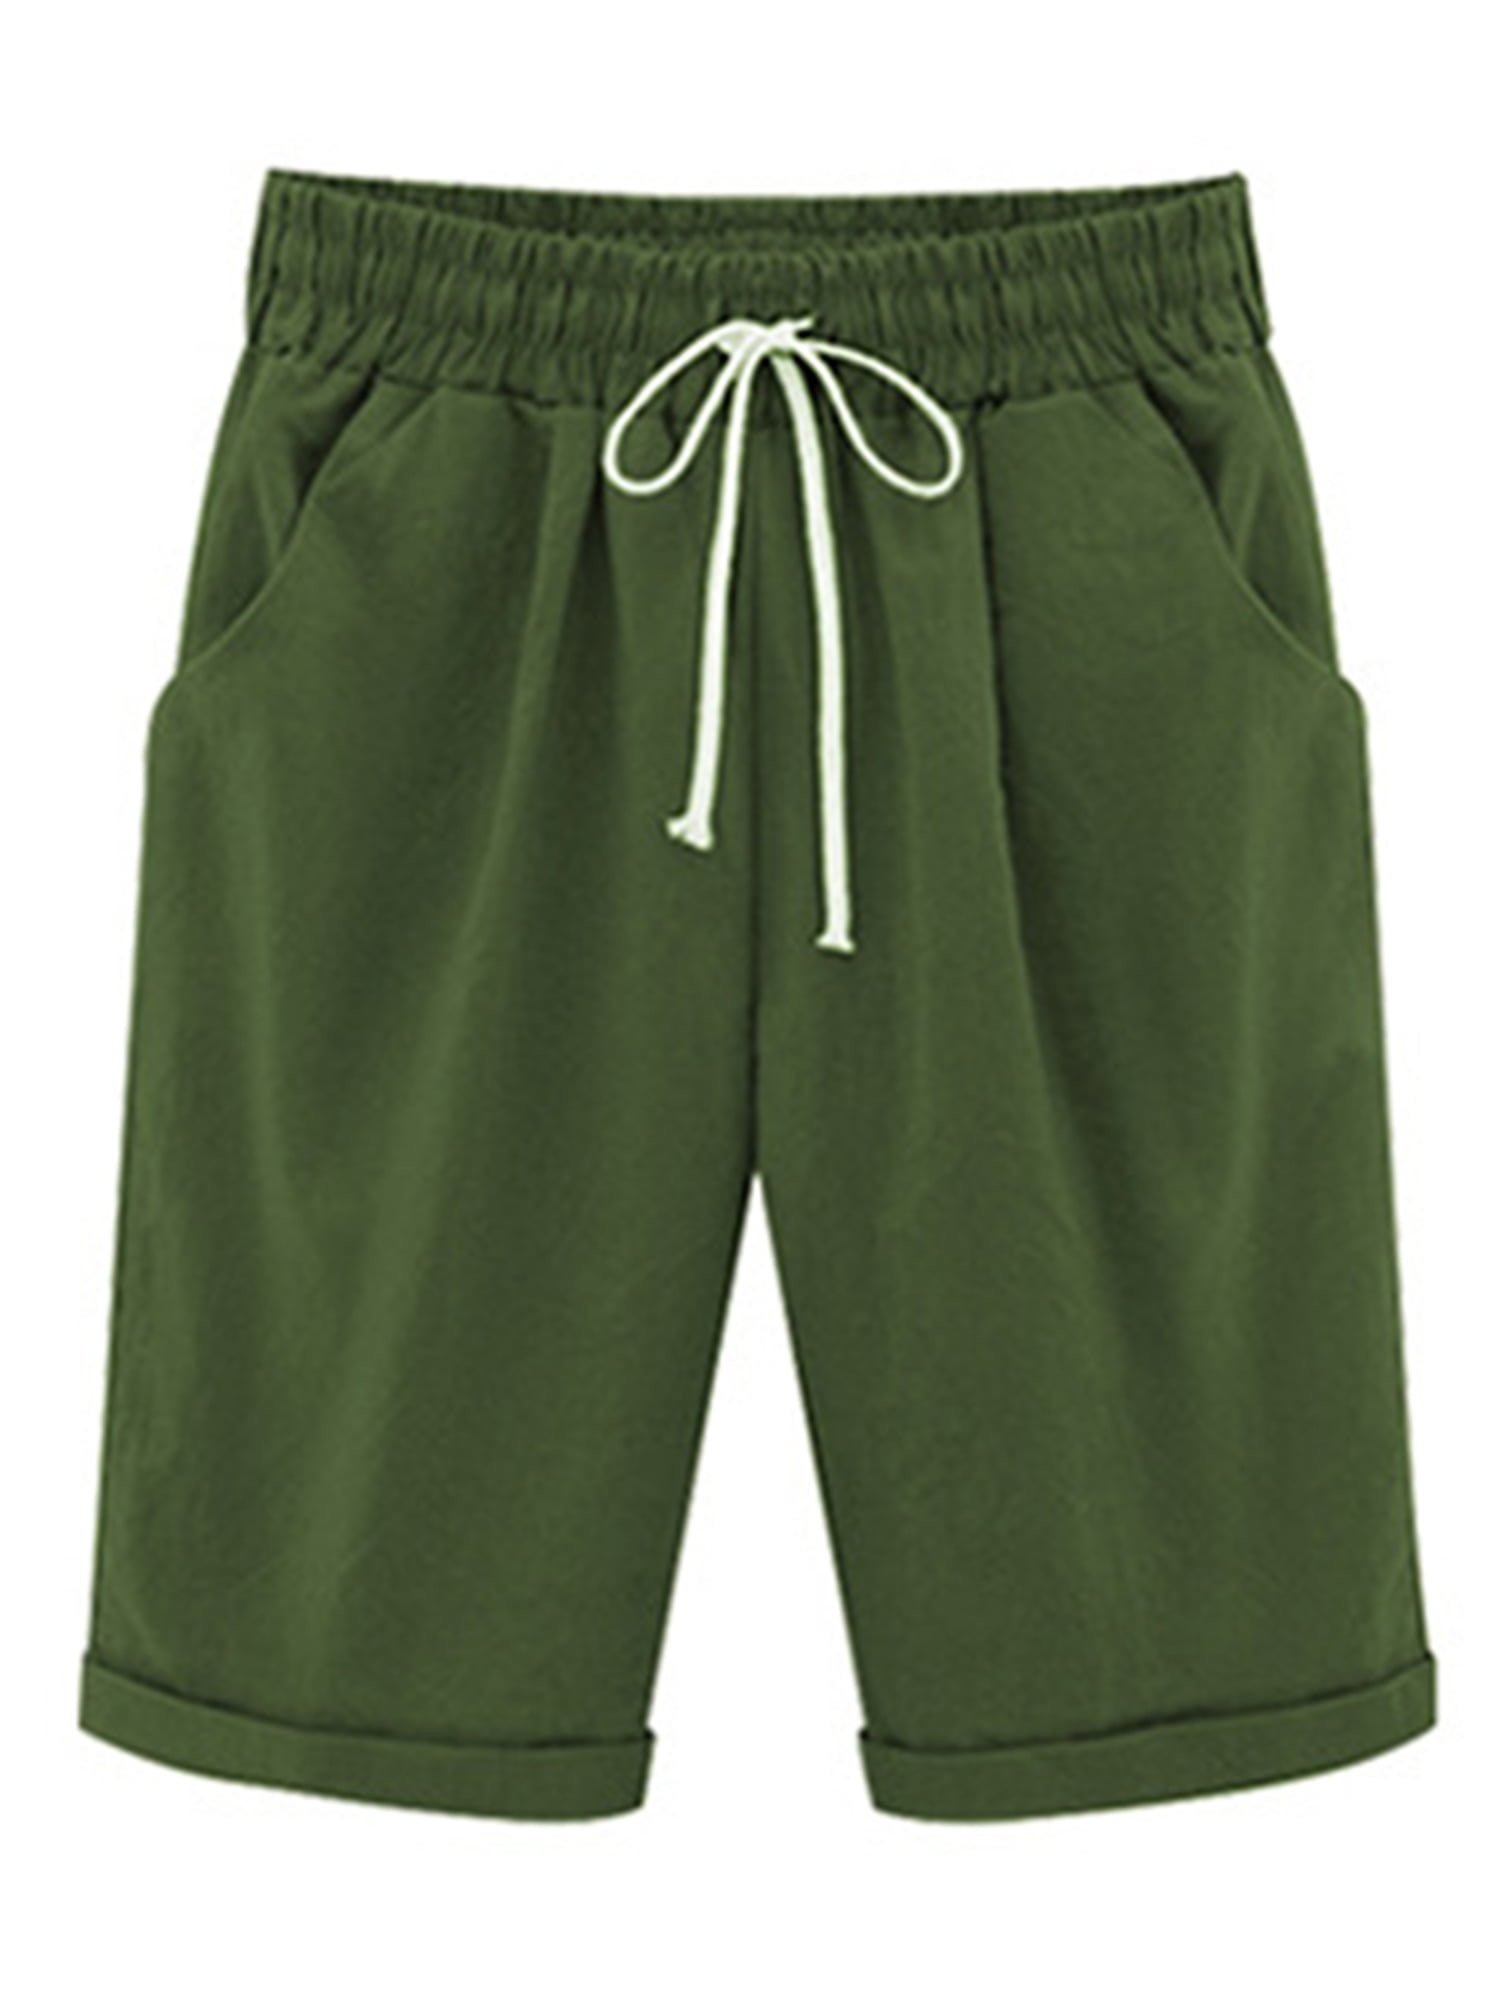 Plus Size Summer Women Casual Beach Shorts Ladies Sports Shorts Cotton Hot Pants 